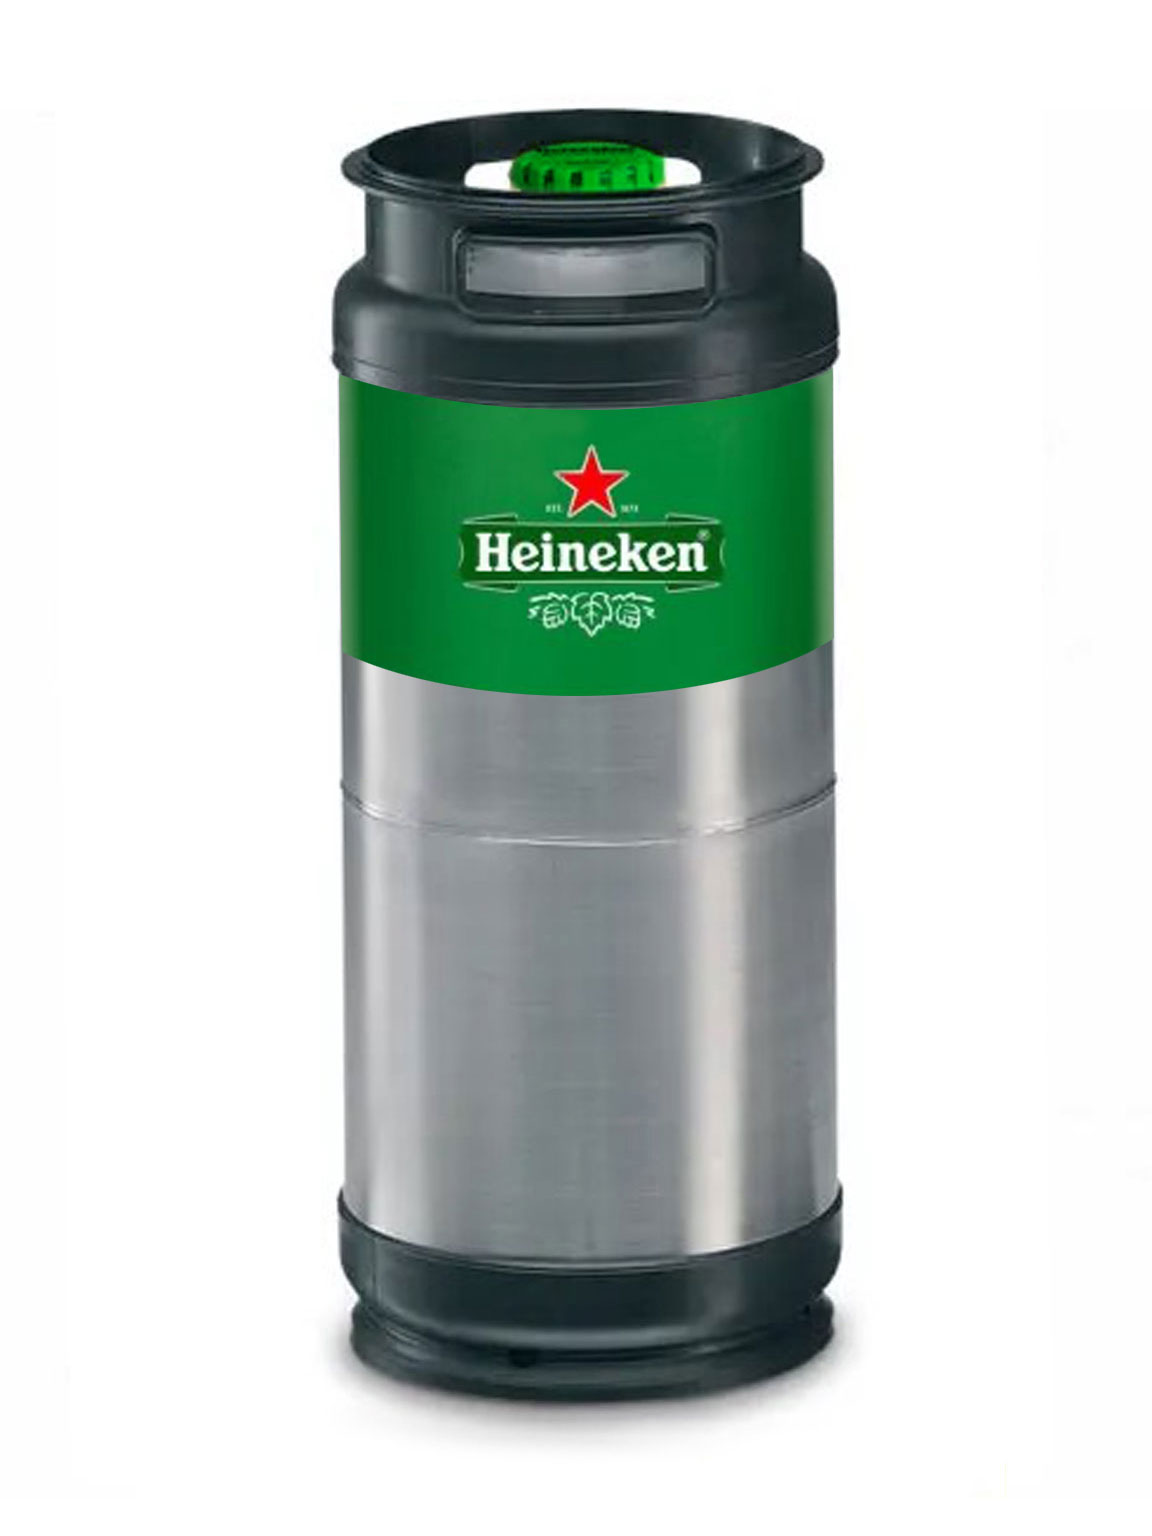 Heineken-groot-20L-1152×1536